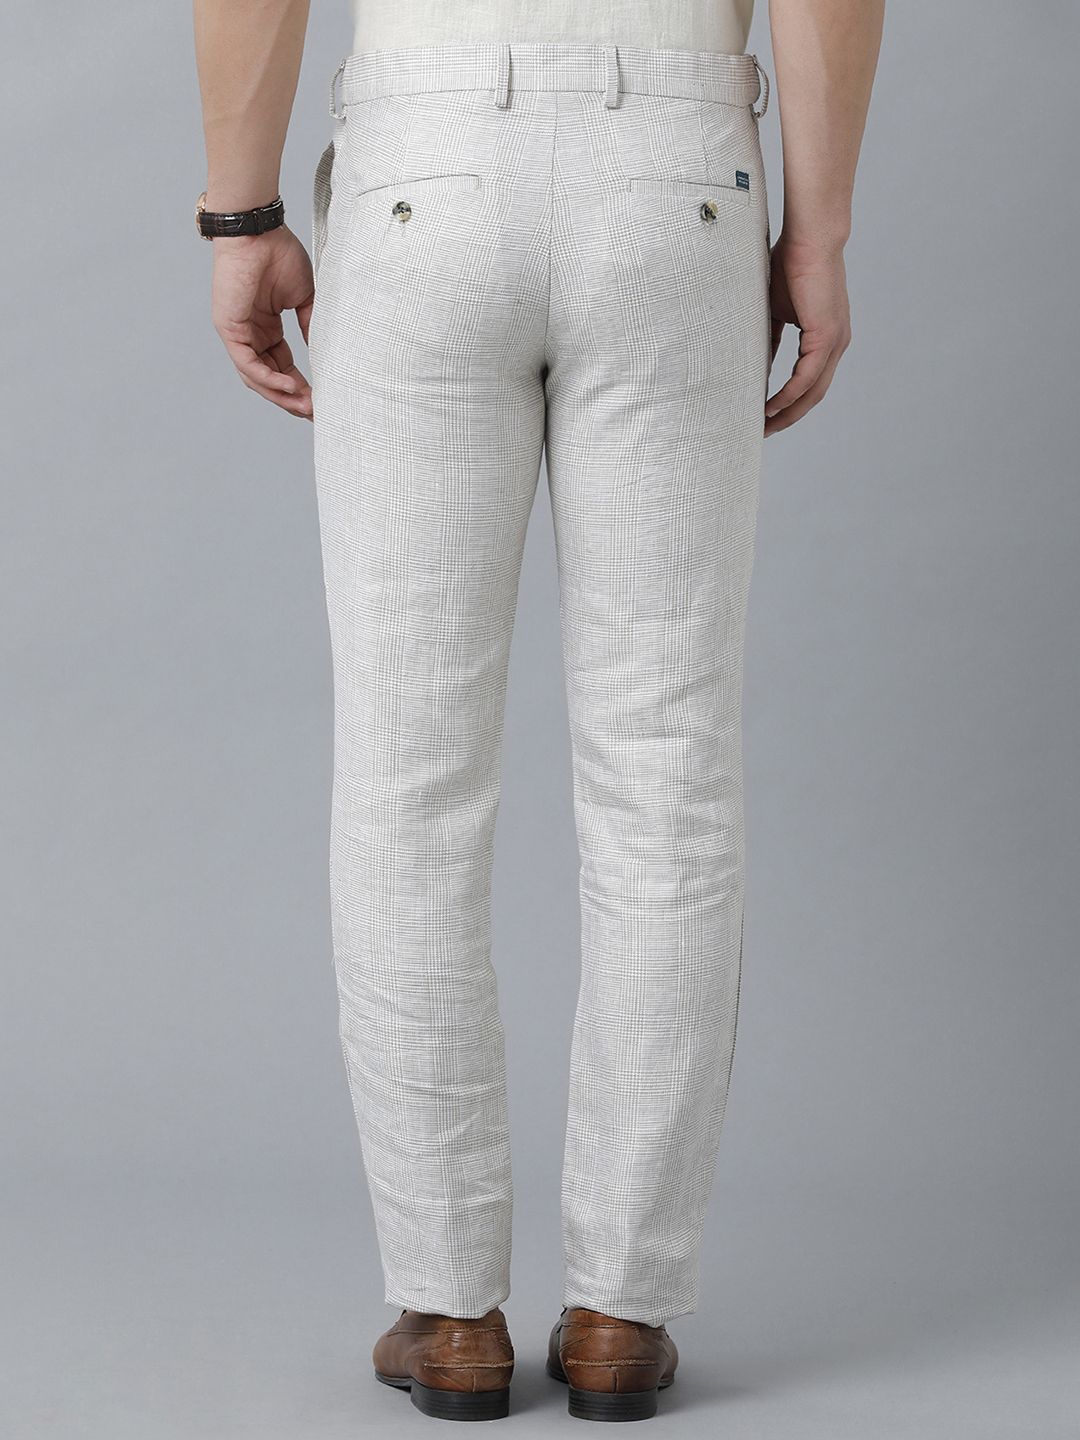 Buy Enjoybuy Mens Summer Cotton Linen Long Casual Pants Elastic Waist Loose  Fit Beach Pants at Amazonin